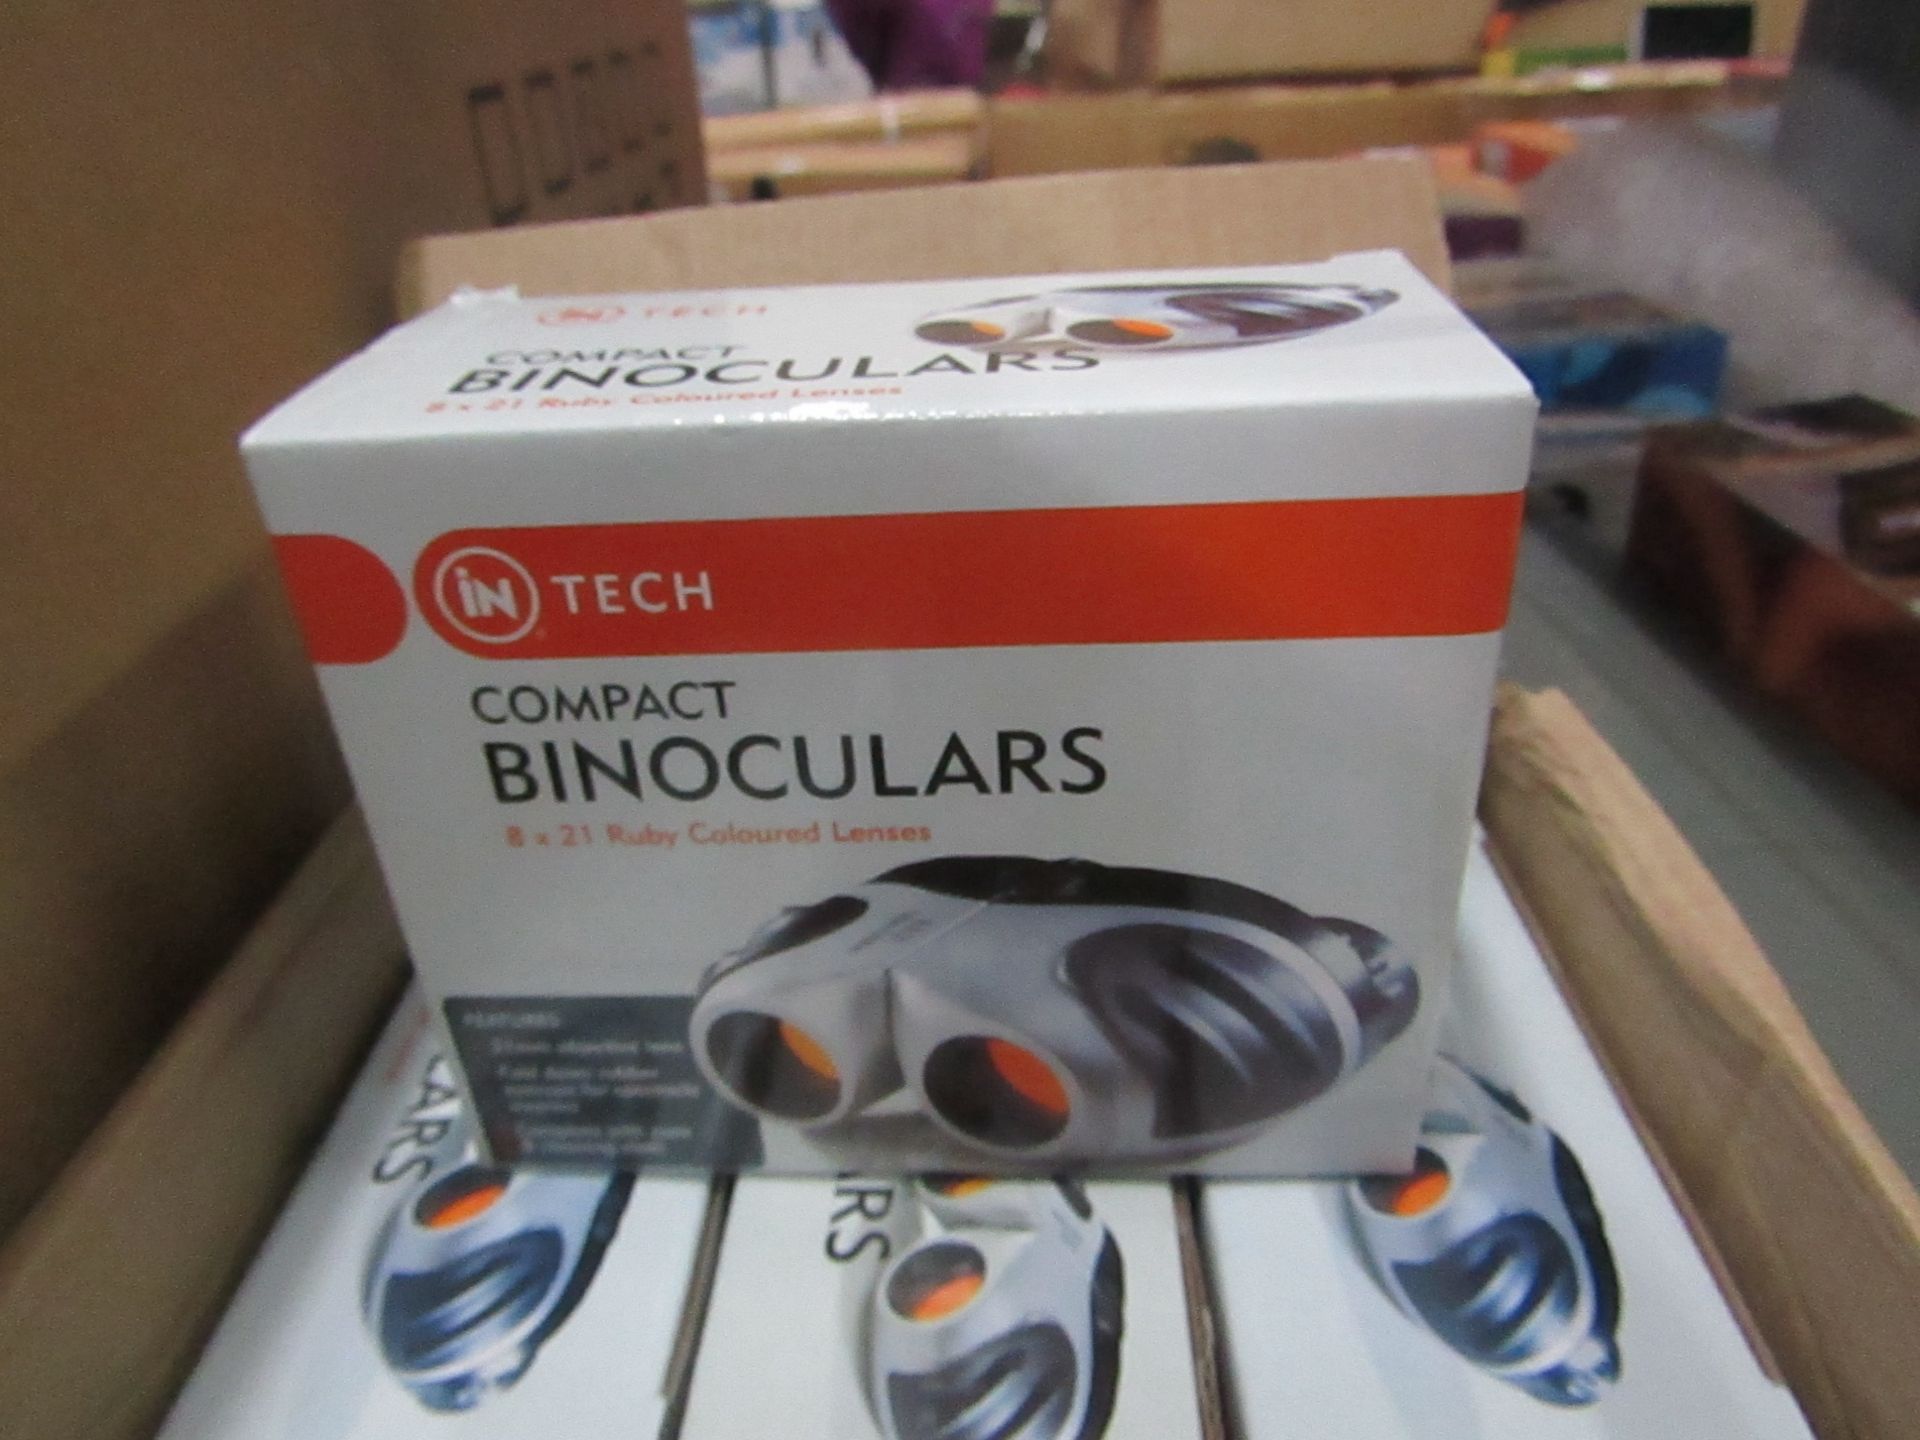 2x InTech compact Binoculars, new